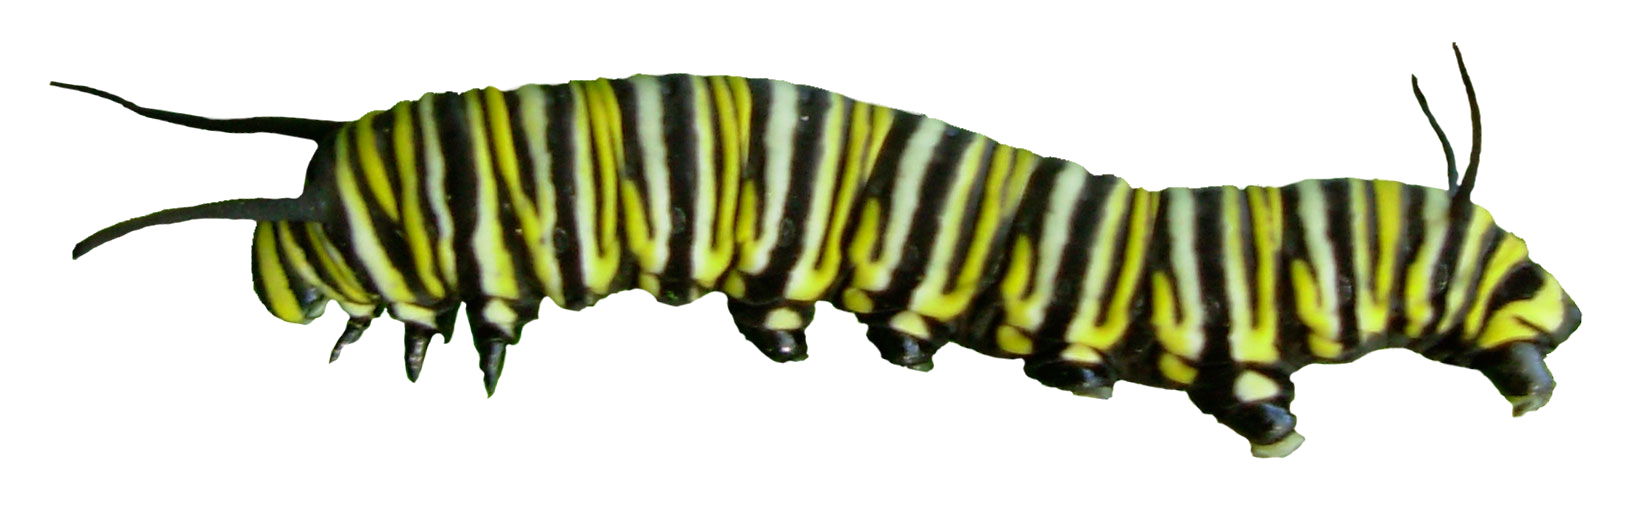 caterpillar-png-transparent-image-download-size-1635x507px